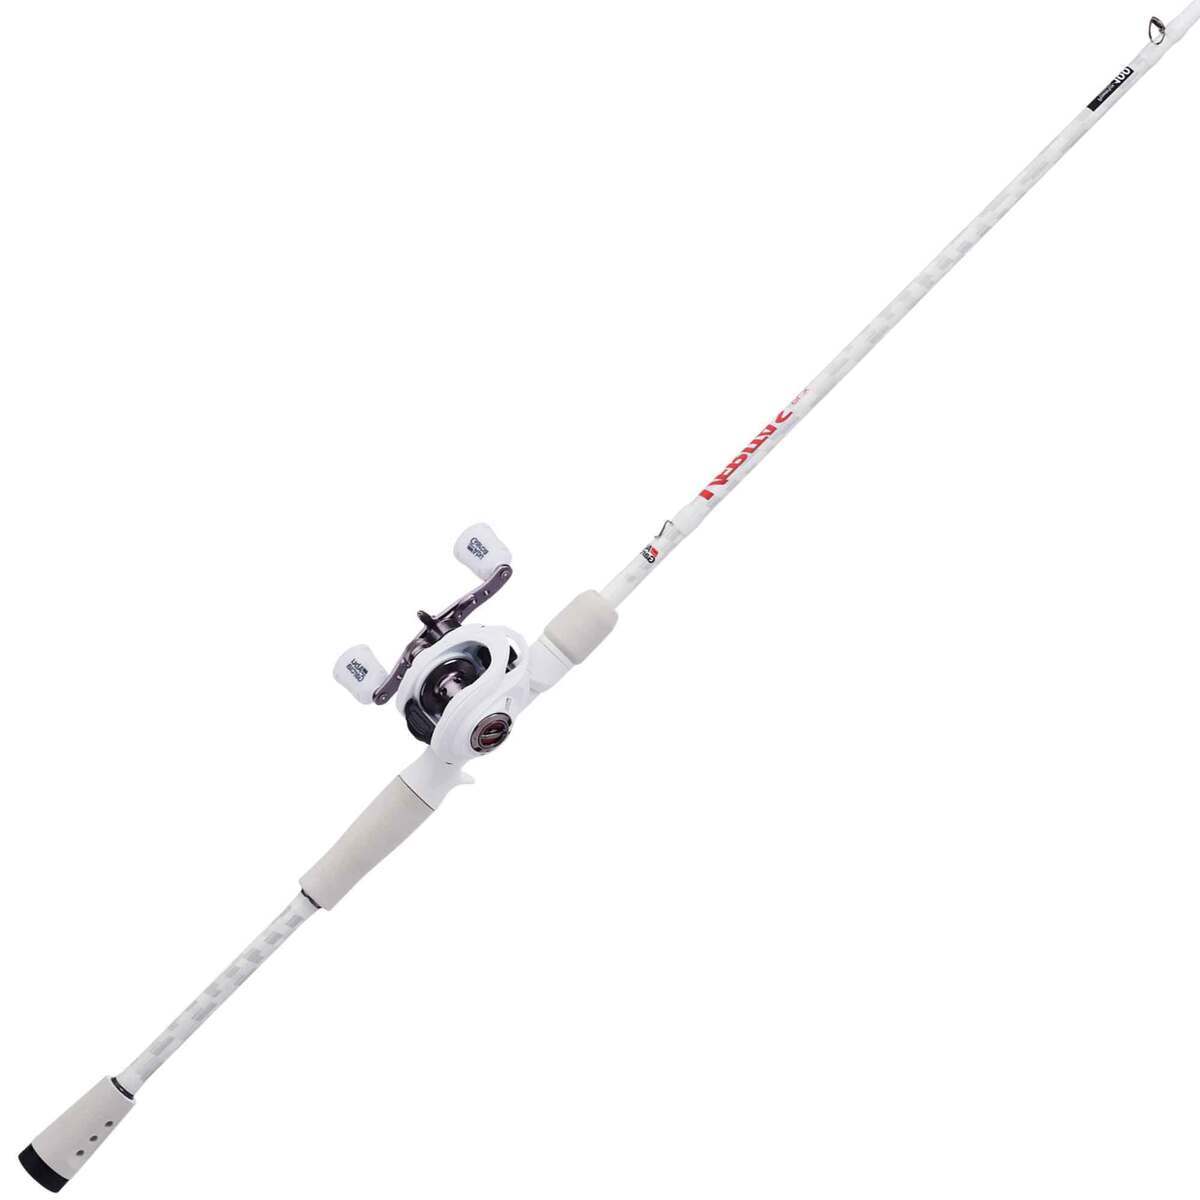 Abu Garcia Veritas Low Profile Baitcast Reel and Fishing Rod Combo